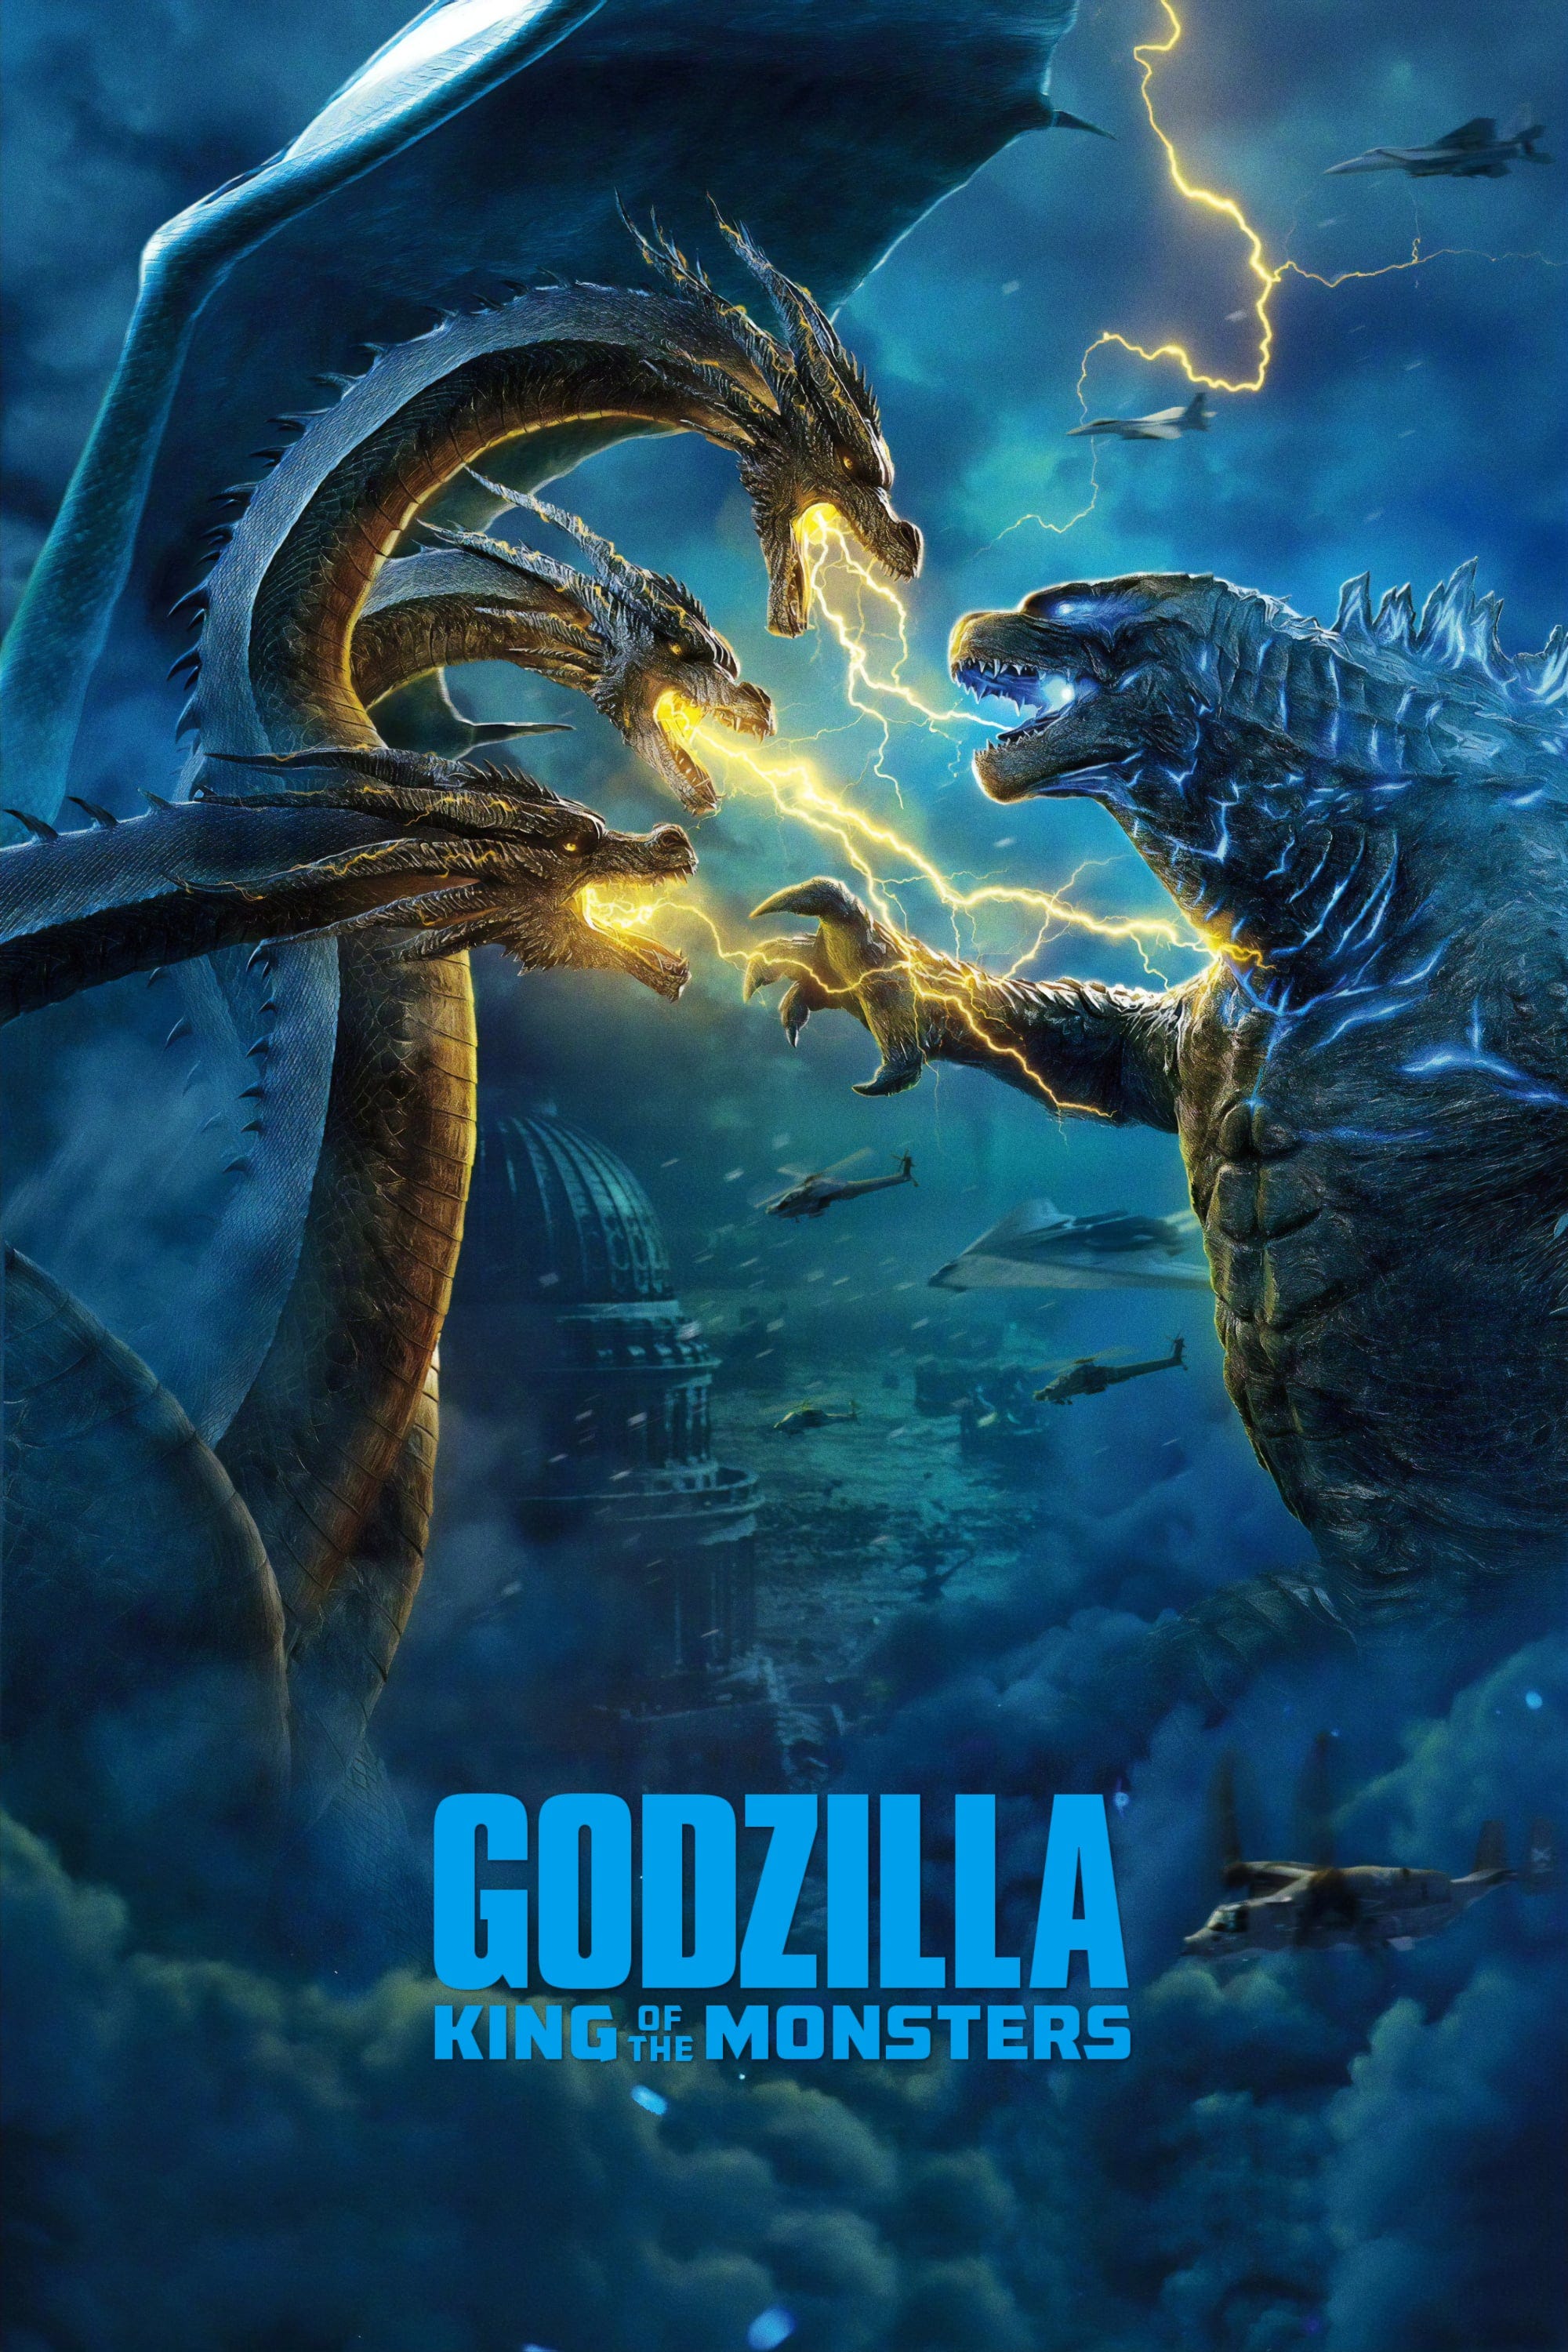 Regarder Hd Godzilla King Of The Monsters 2019 Film Streaming